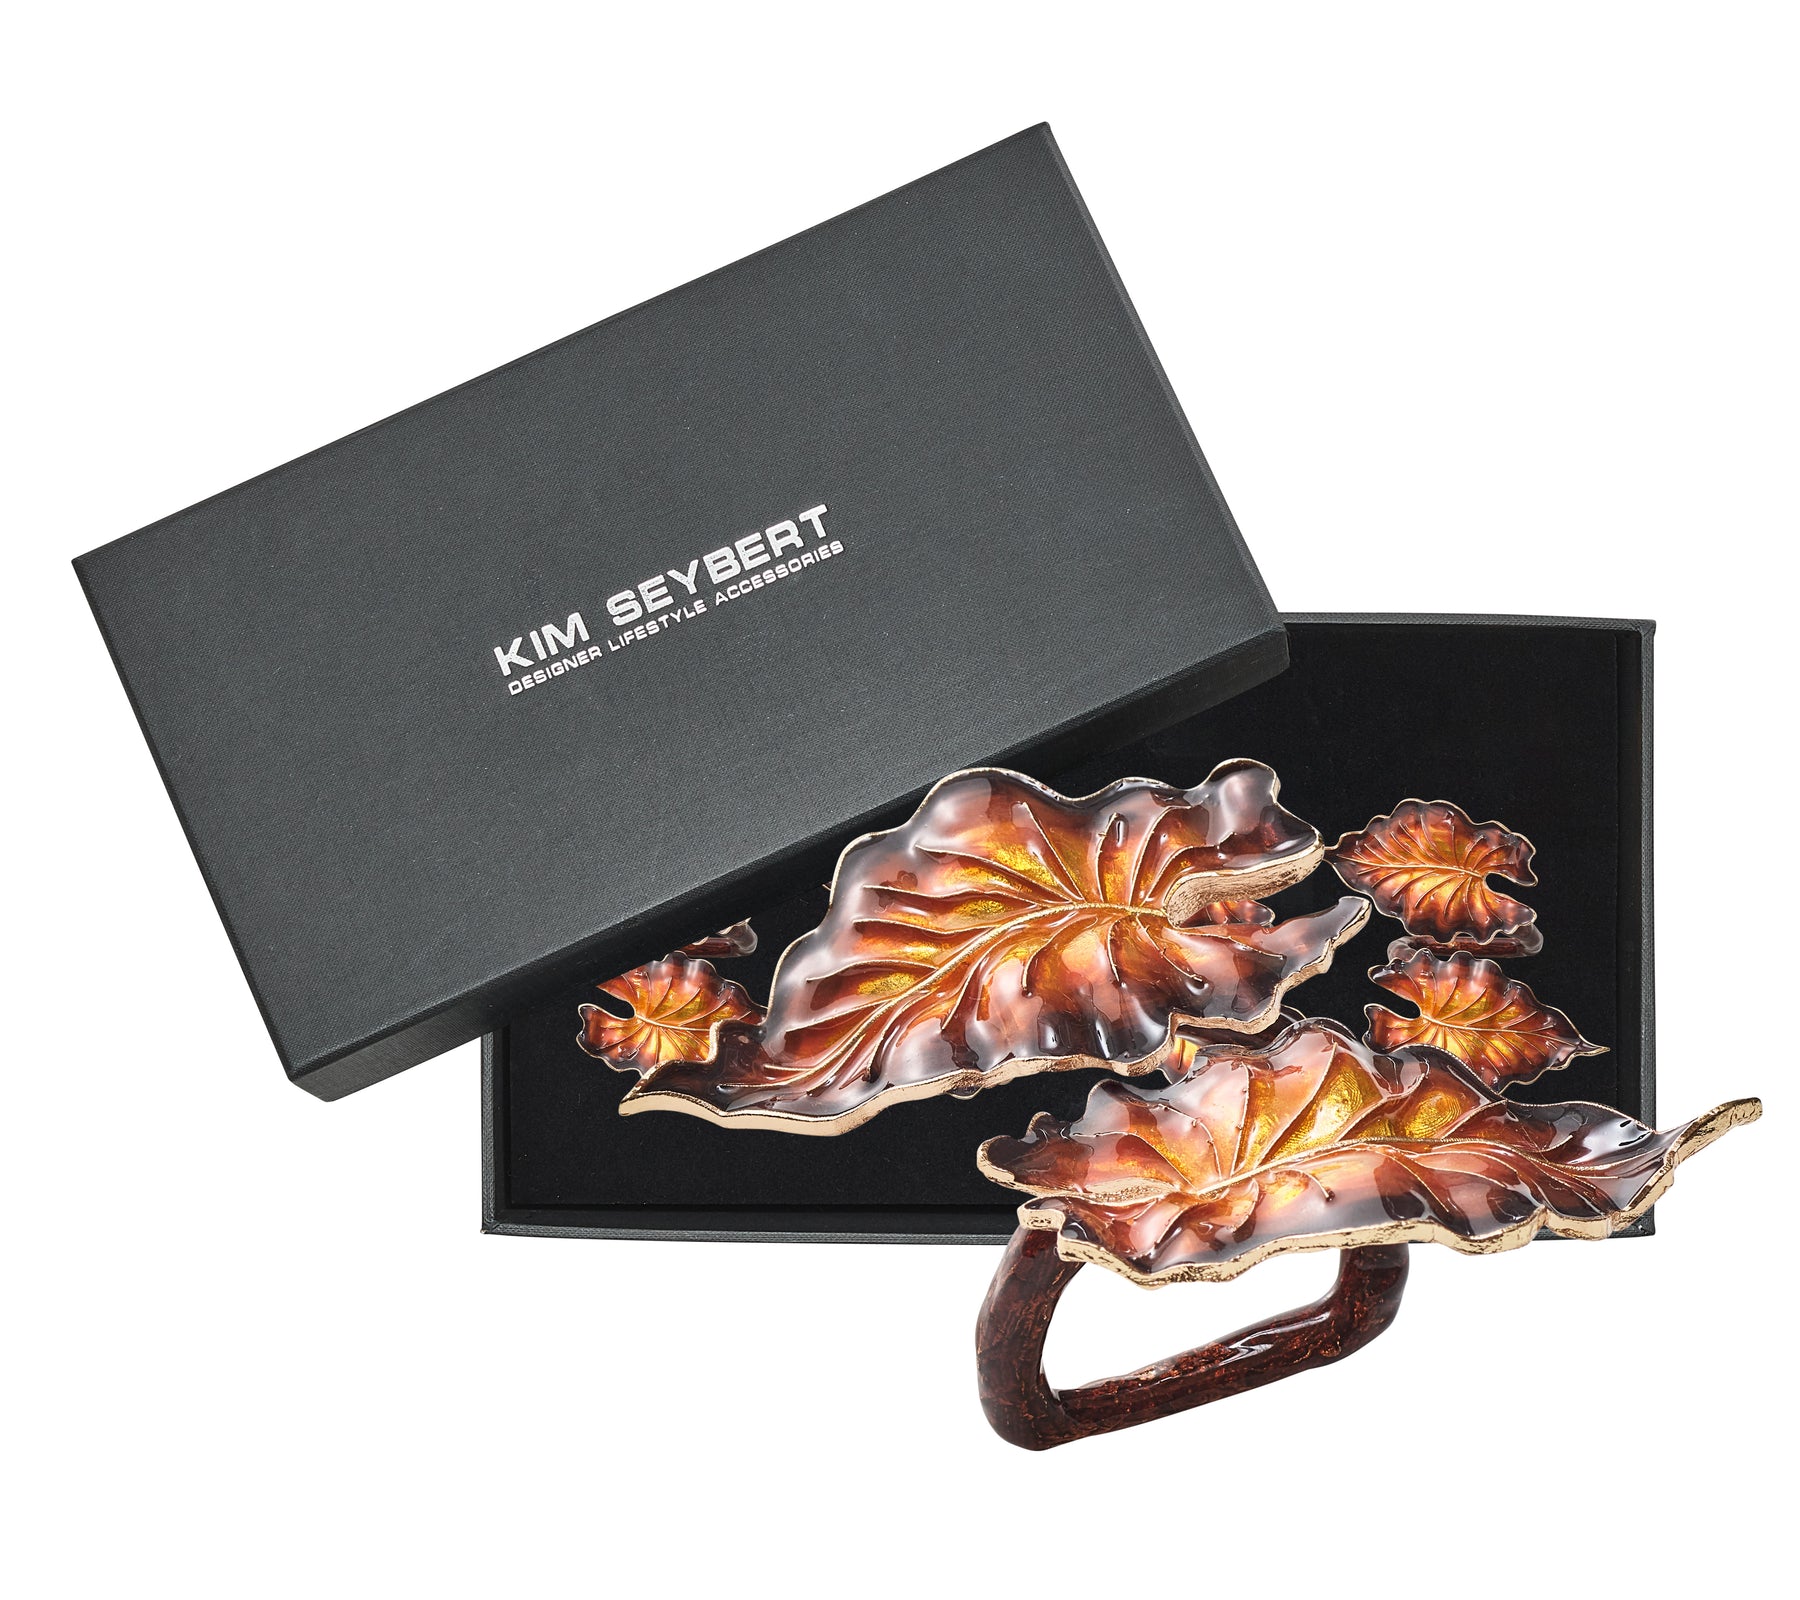 Kim Seybert Luxury Fern Napkin Ring in Brown & Gold in a Gift Box